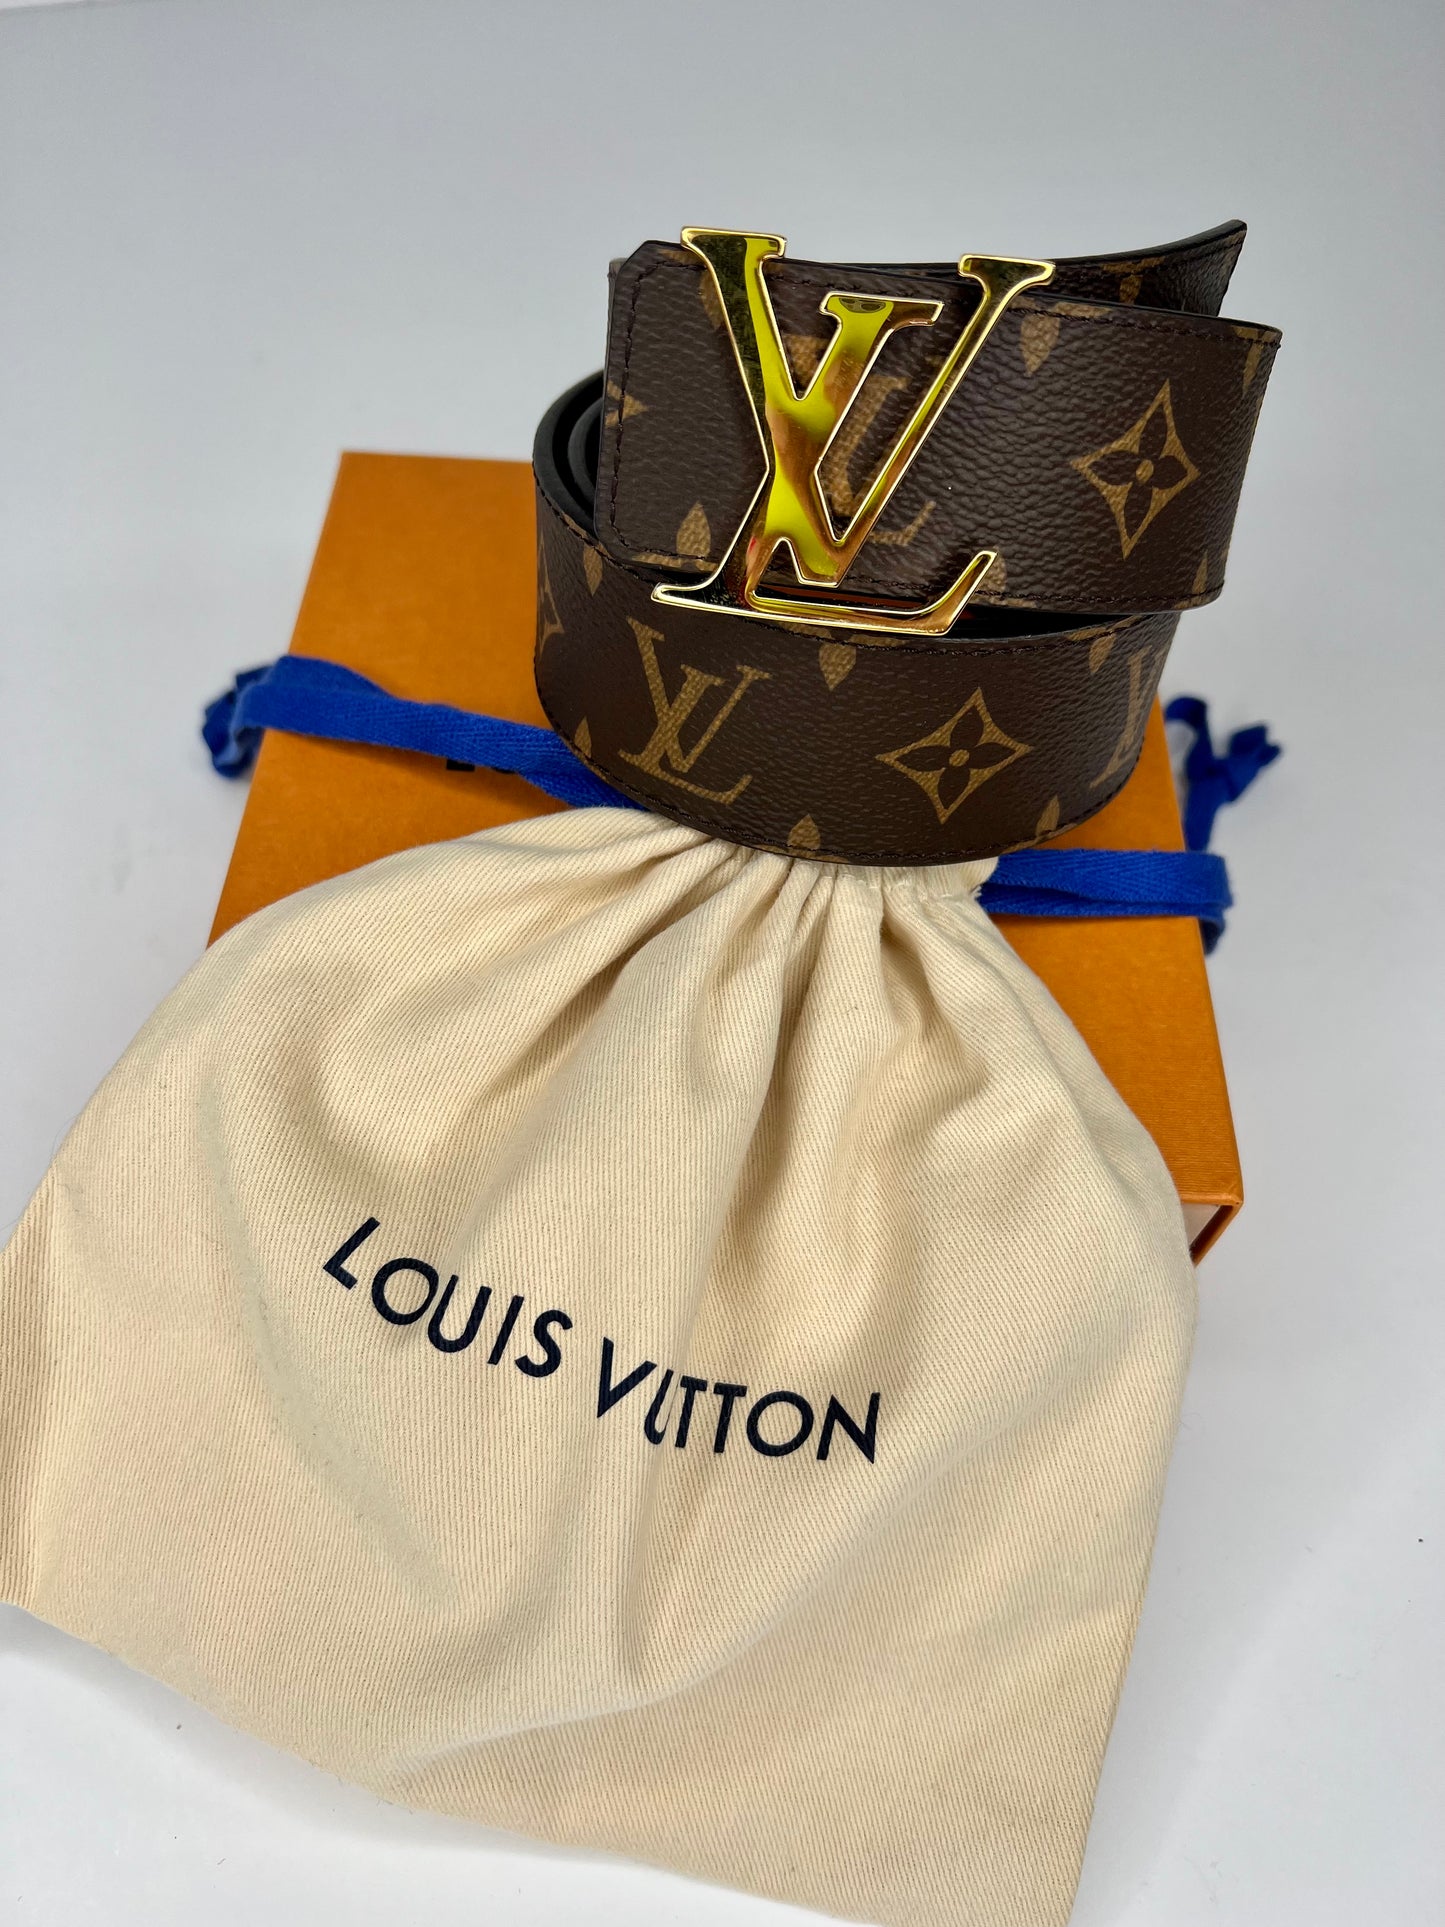 Louis Vuitton Monogram LV Initiales 40mm Reversible Belt